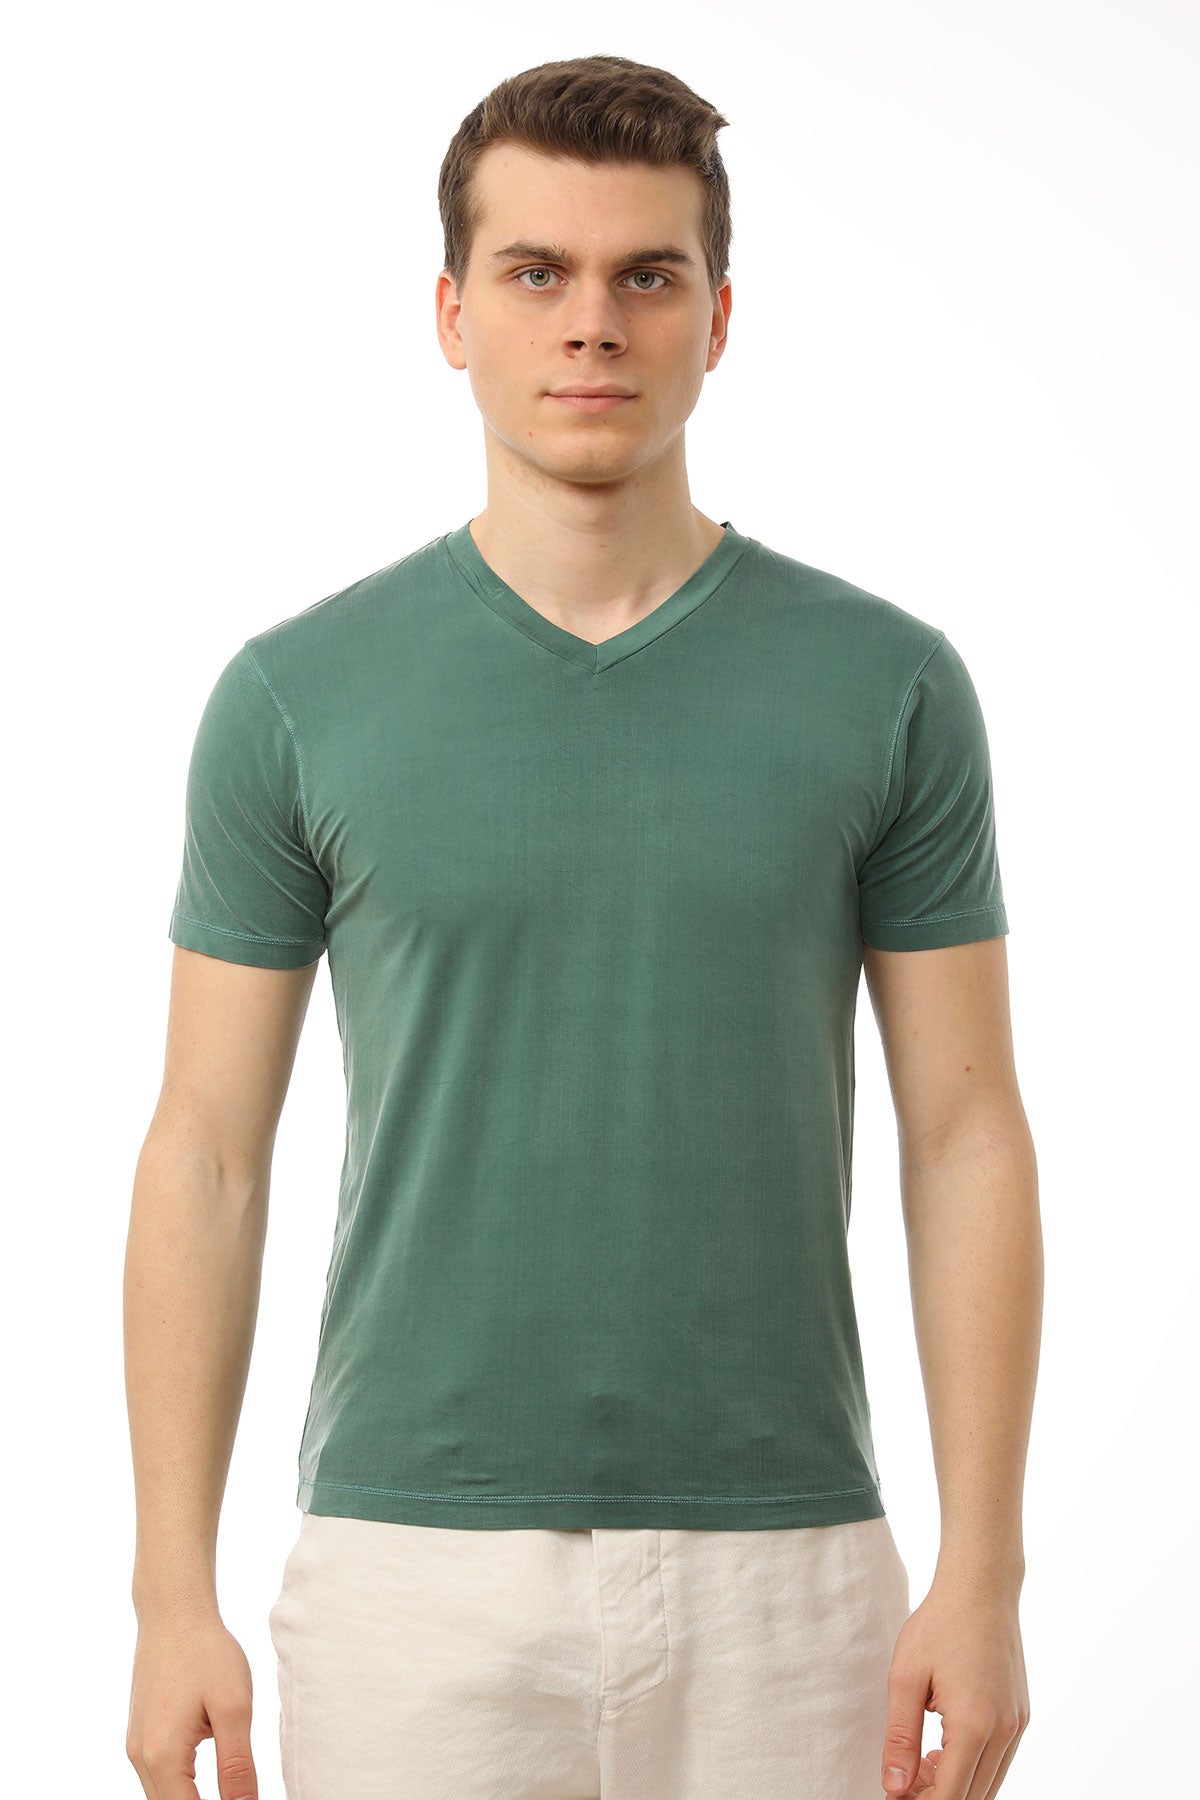 Manifattura T-shirt-Libas Trendy Fashion Store